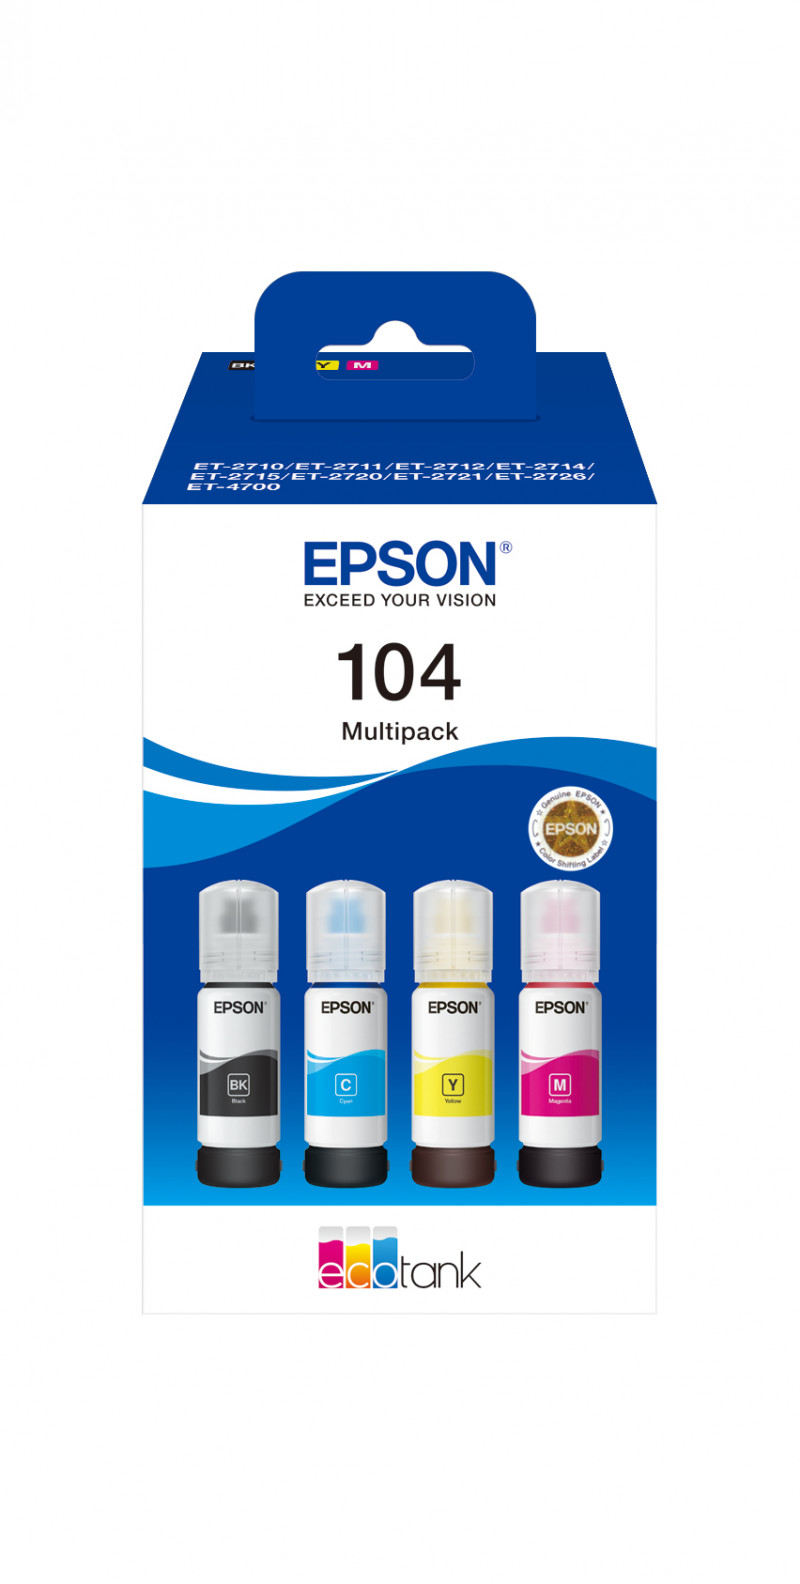 Image of Epson 104 ecotank 4-colour multipack Materiale di consumo Informatica